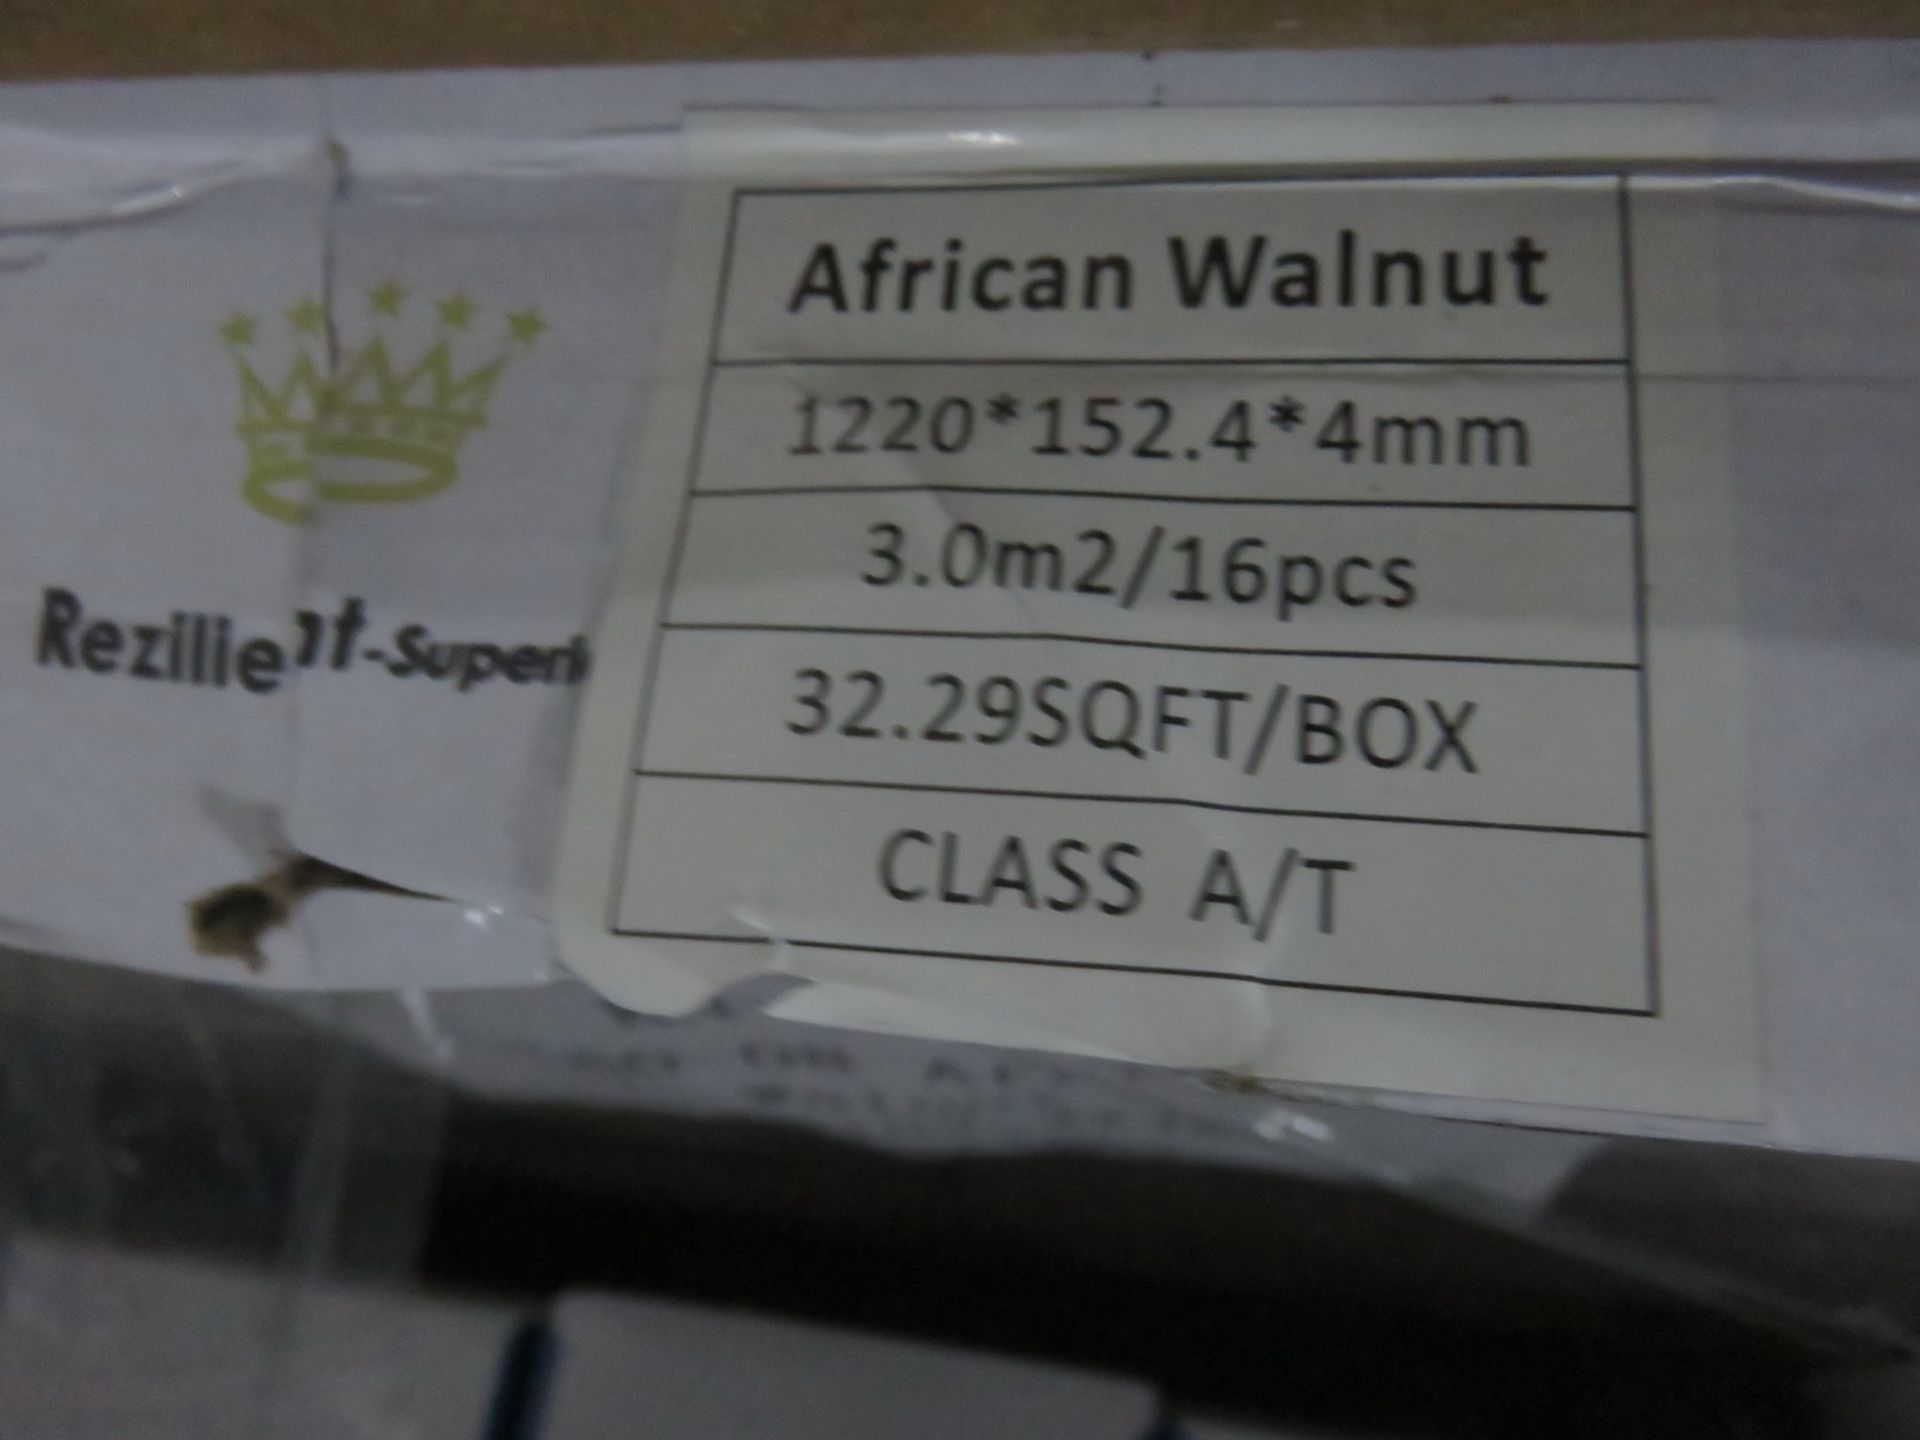 BOXES - REZILIENT SUPERIOR AFRICAN WALNUT 152.4 X 1220 X 4MM PVC CLICK FLOORING (32.29 SQFT/BOX) - Image 2 of 4